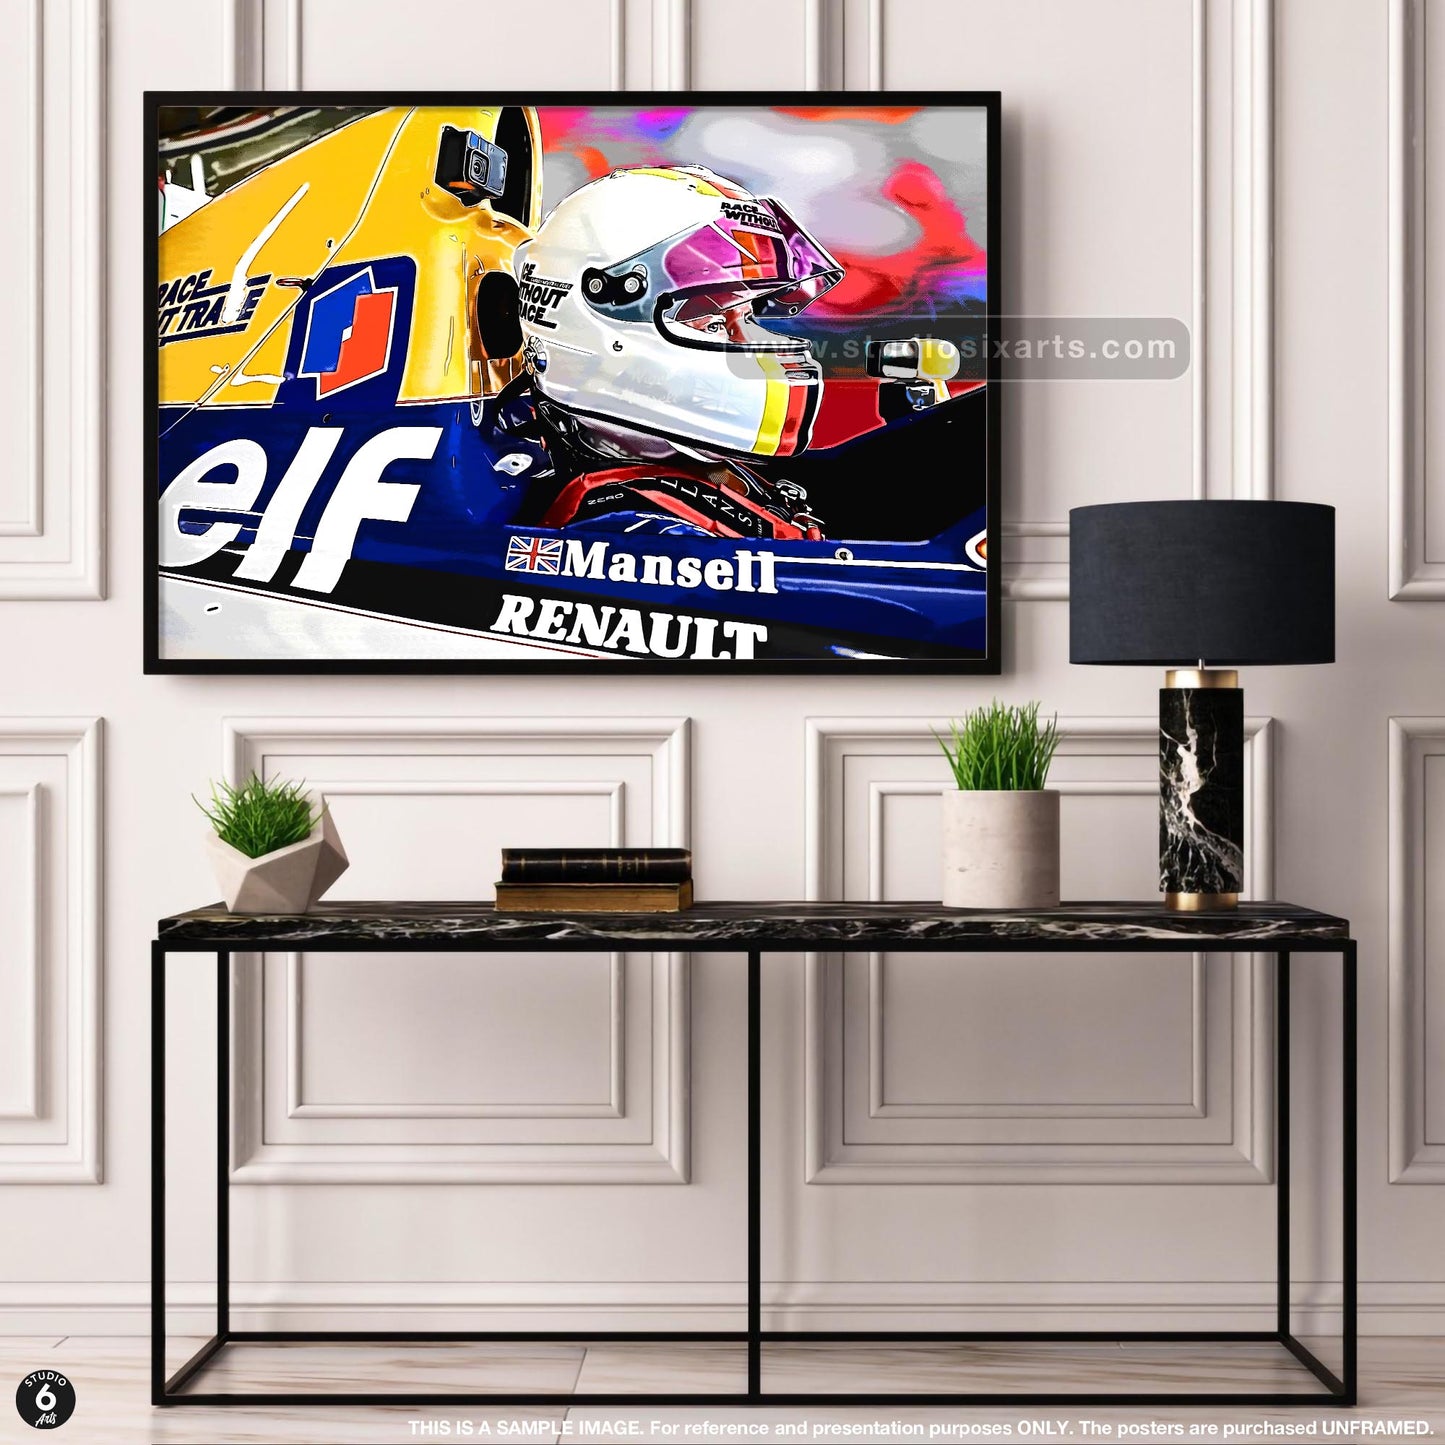 Sebastian Driving Mansell's F1